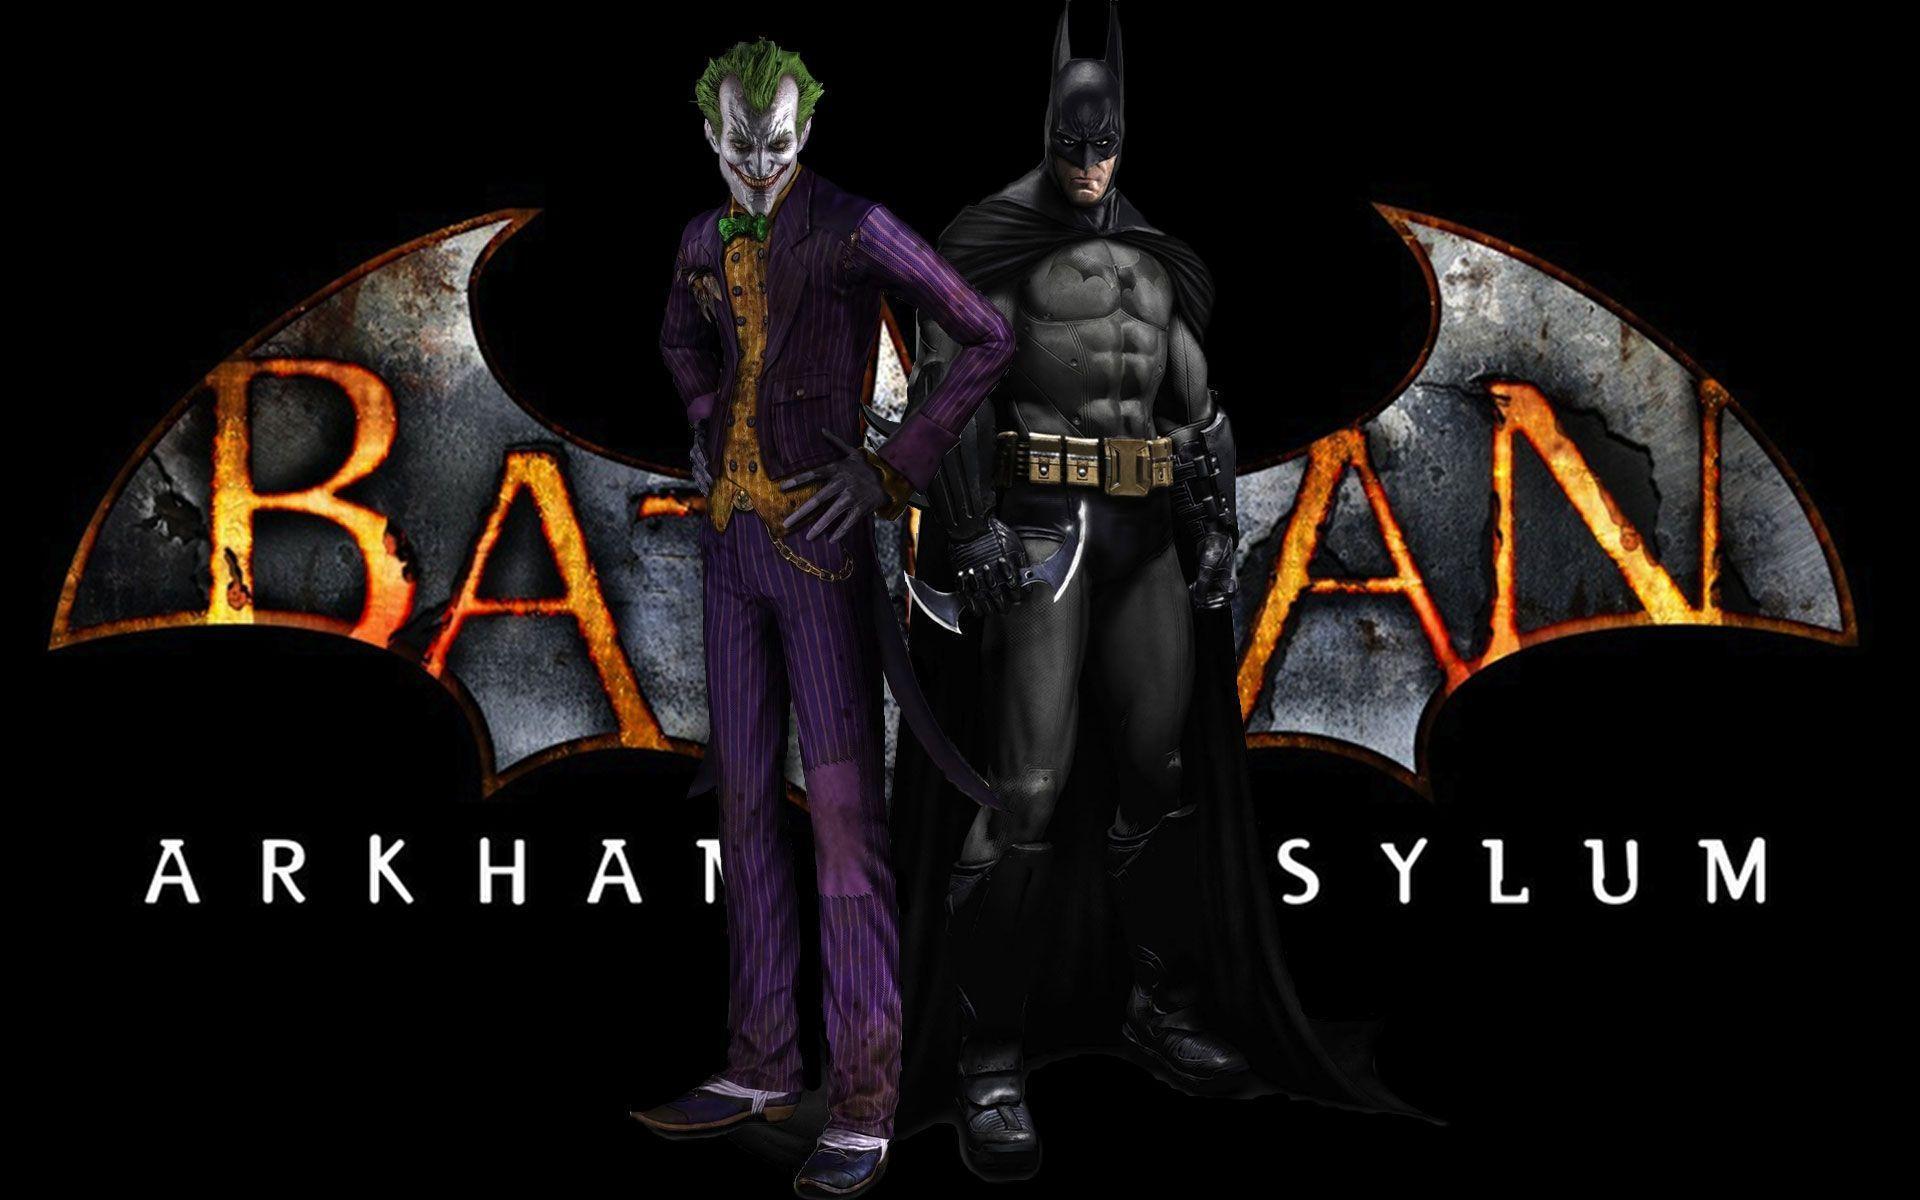 Wallpaper For > Batman Arkham Asylum HD Wallpaper